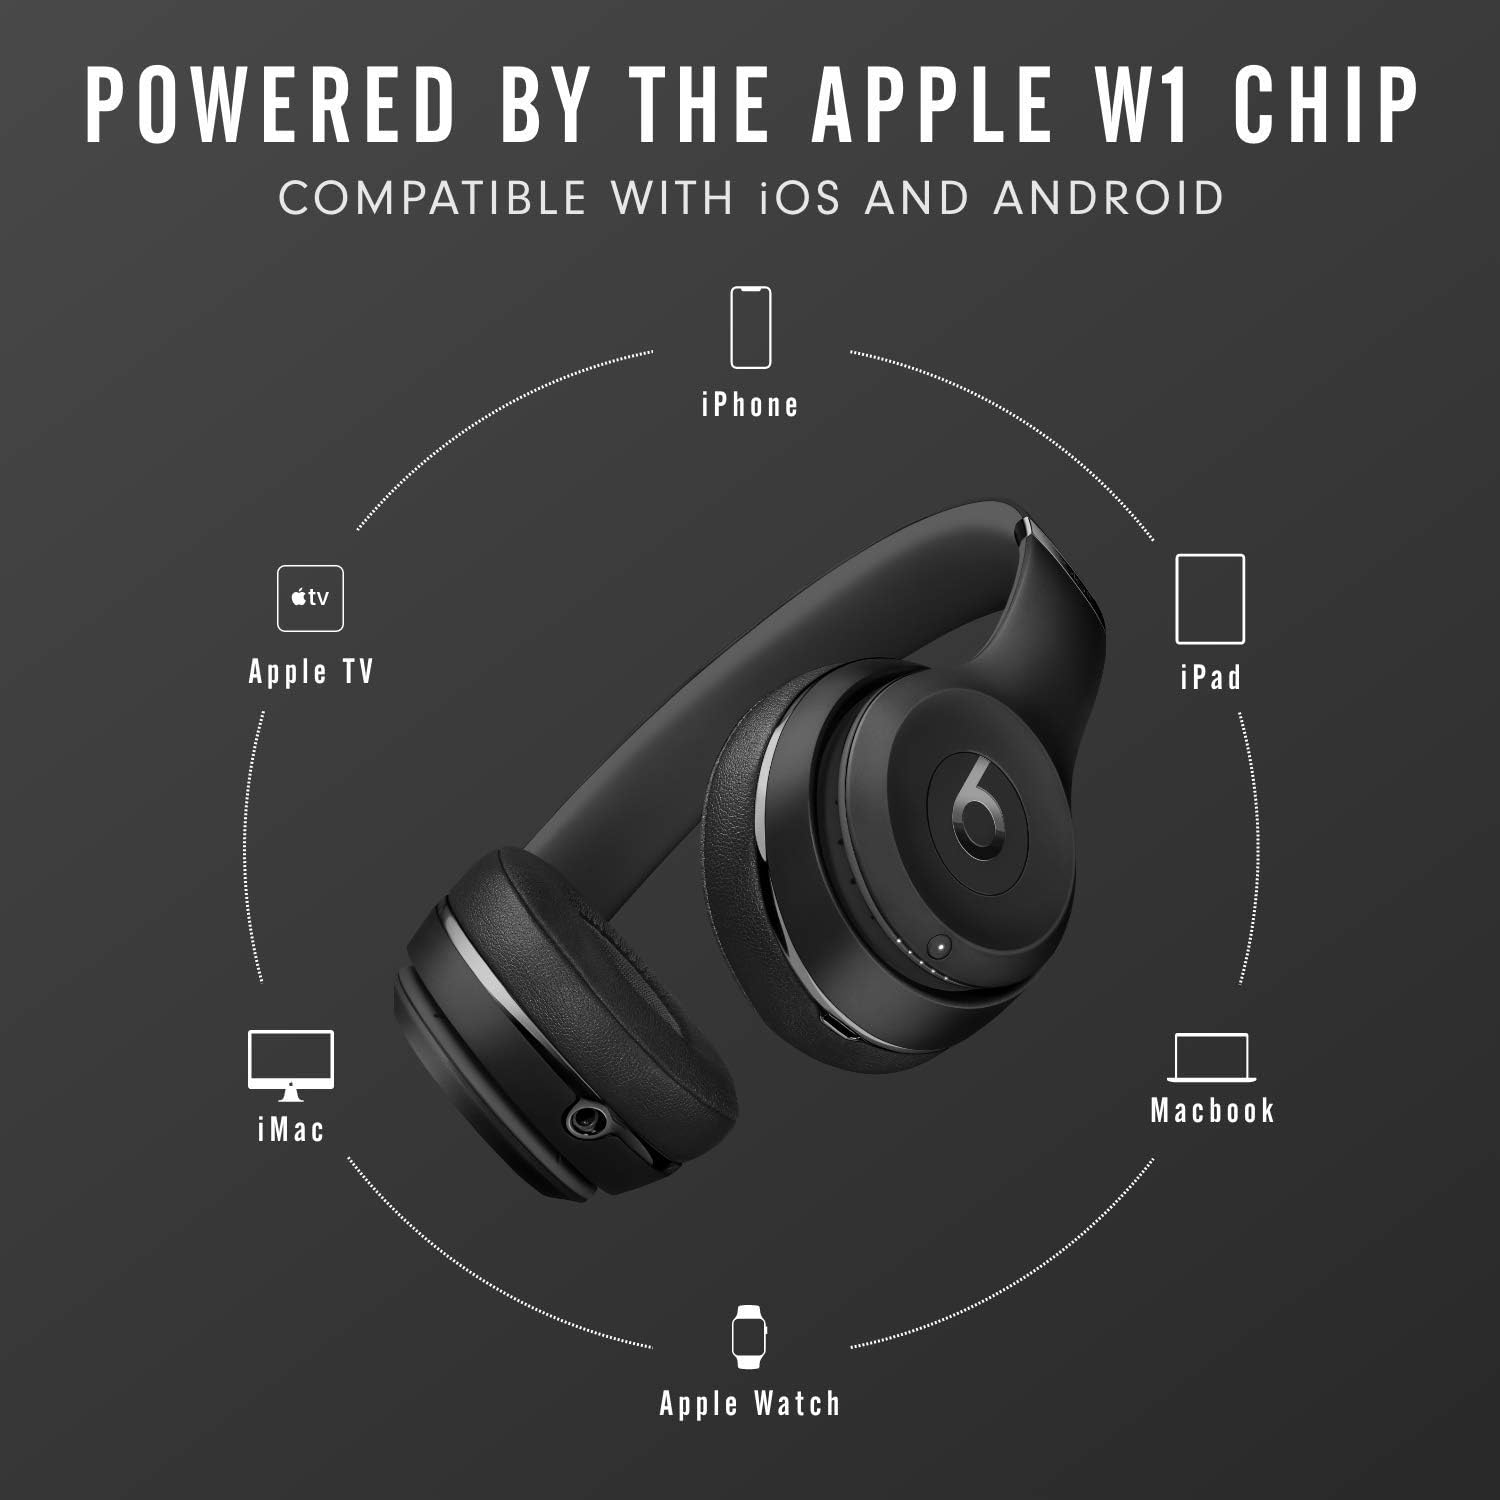 Beats MX432AE/A Solo3 Wireless On-Ear Headphones - Black, Bluetooth